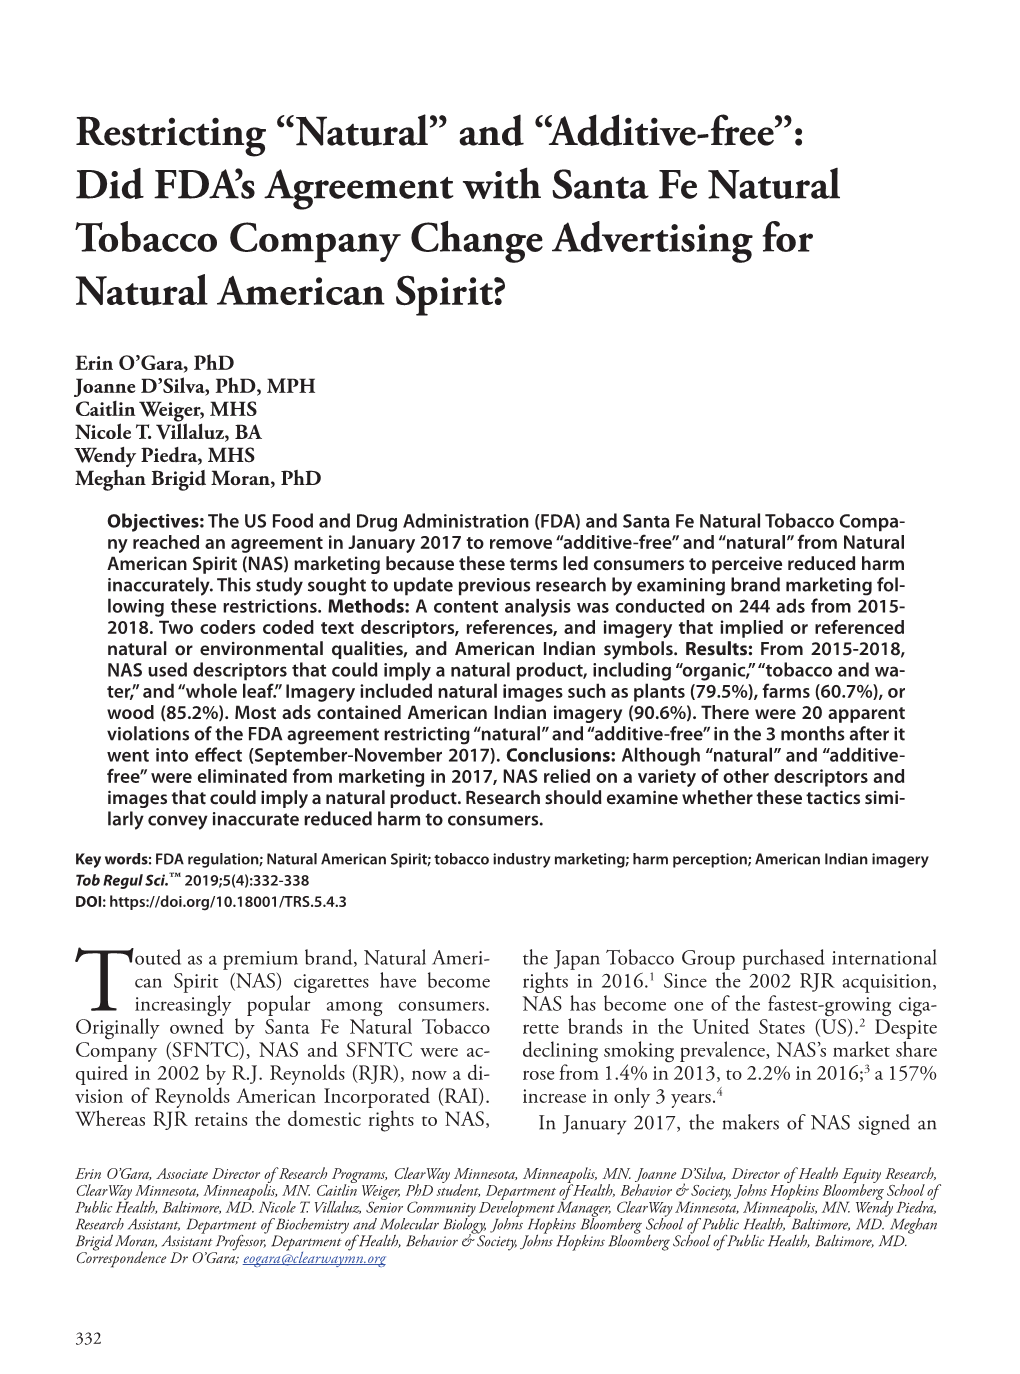 Did FDA's Agreement with Santa Fe Natural Tobacco Company